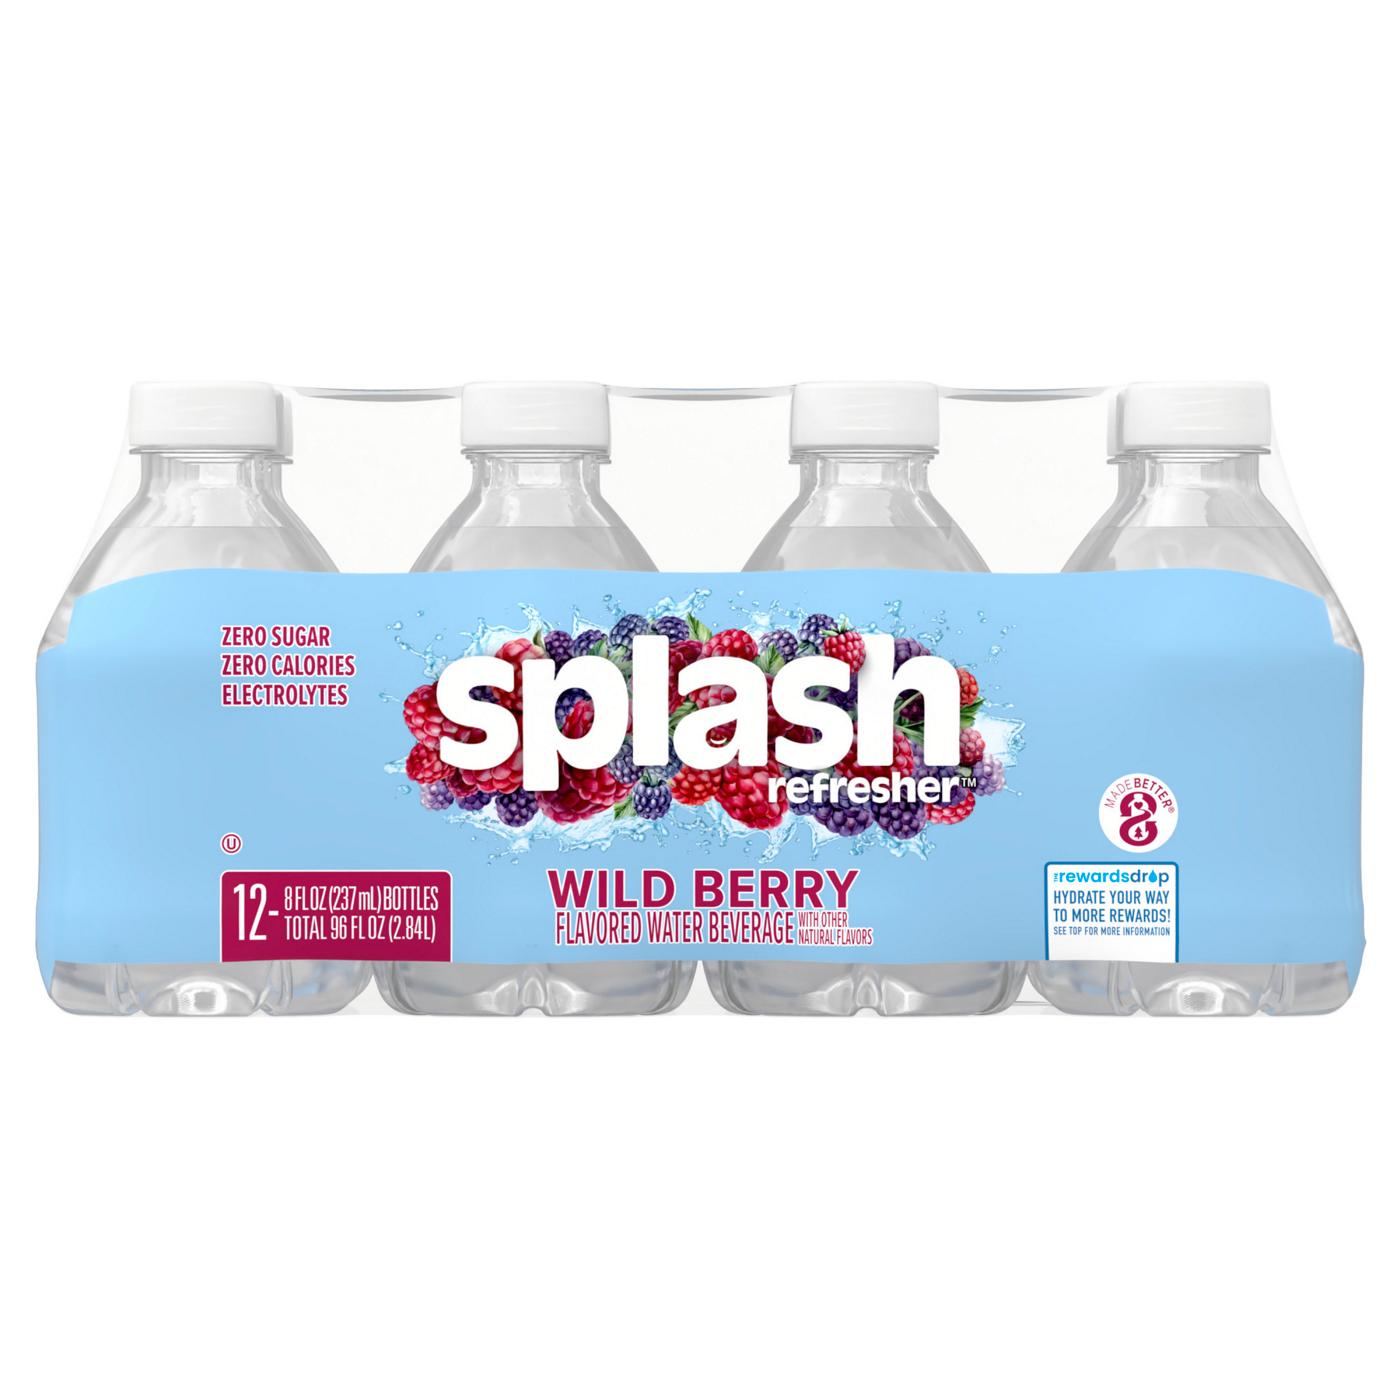 SPLASH Wild Berry Flavor Water Beverage 8 oz Bottles; image 5 of 7